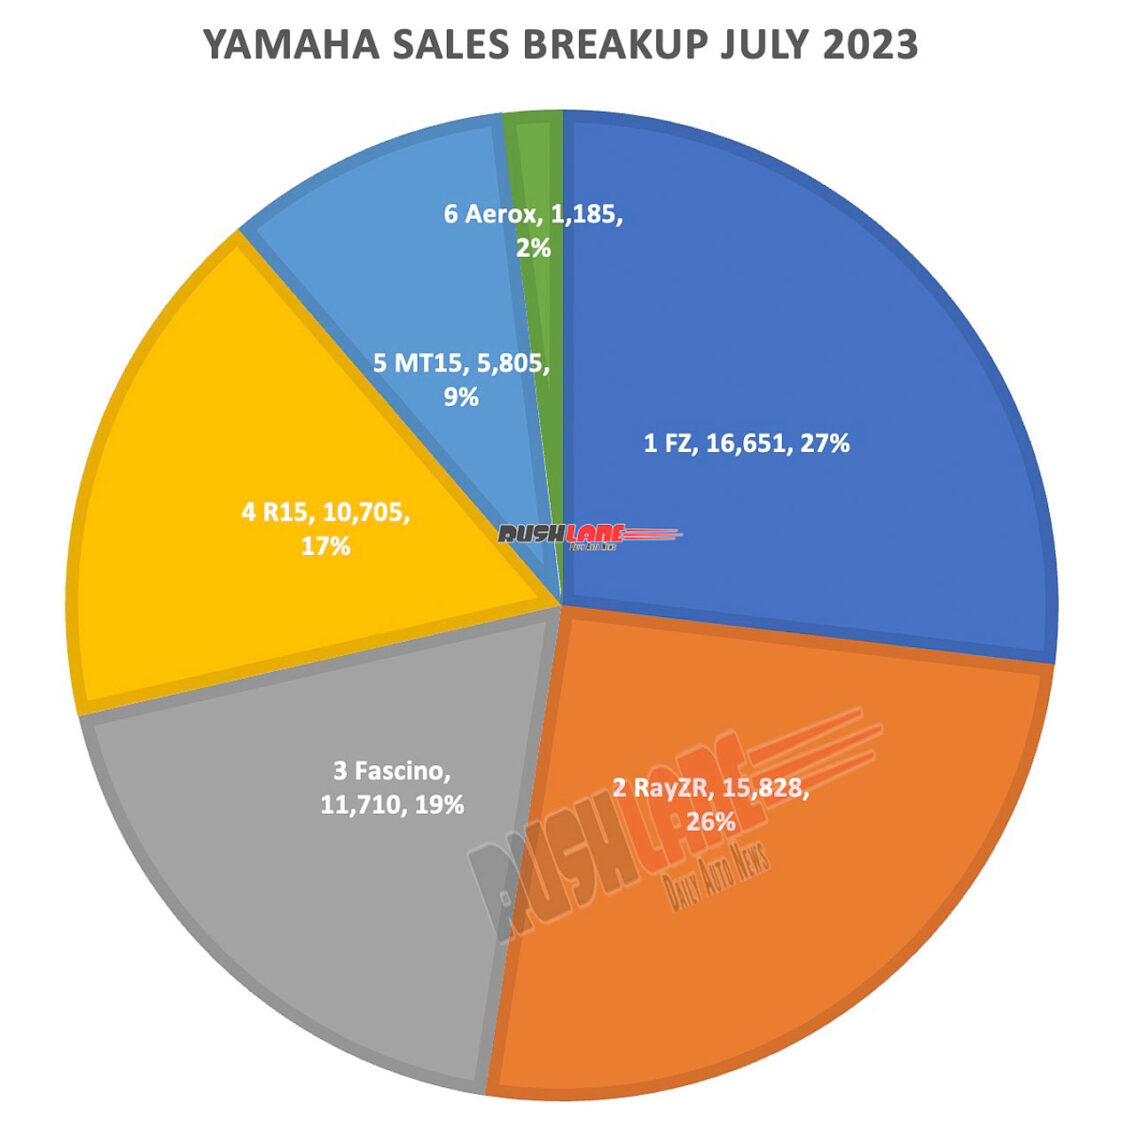 Yamaha India sales breakup July 2023